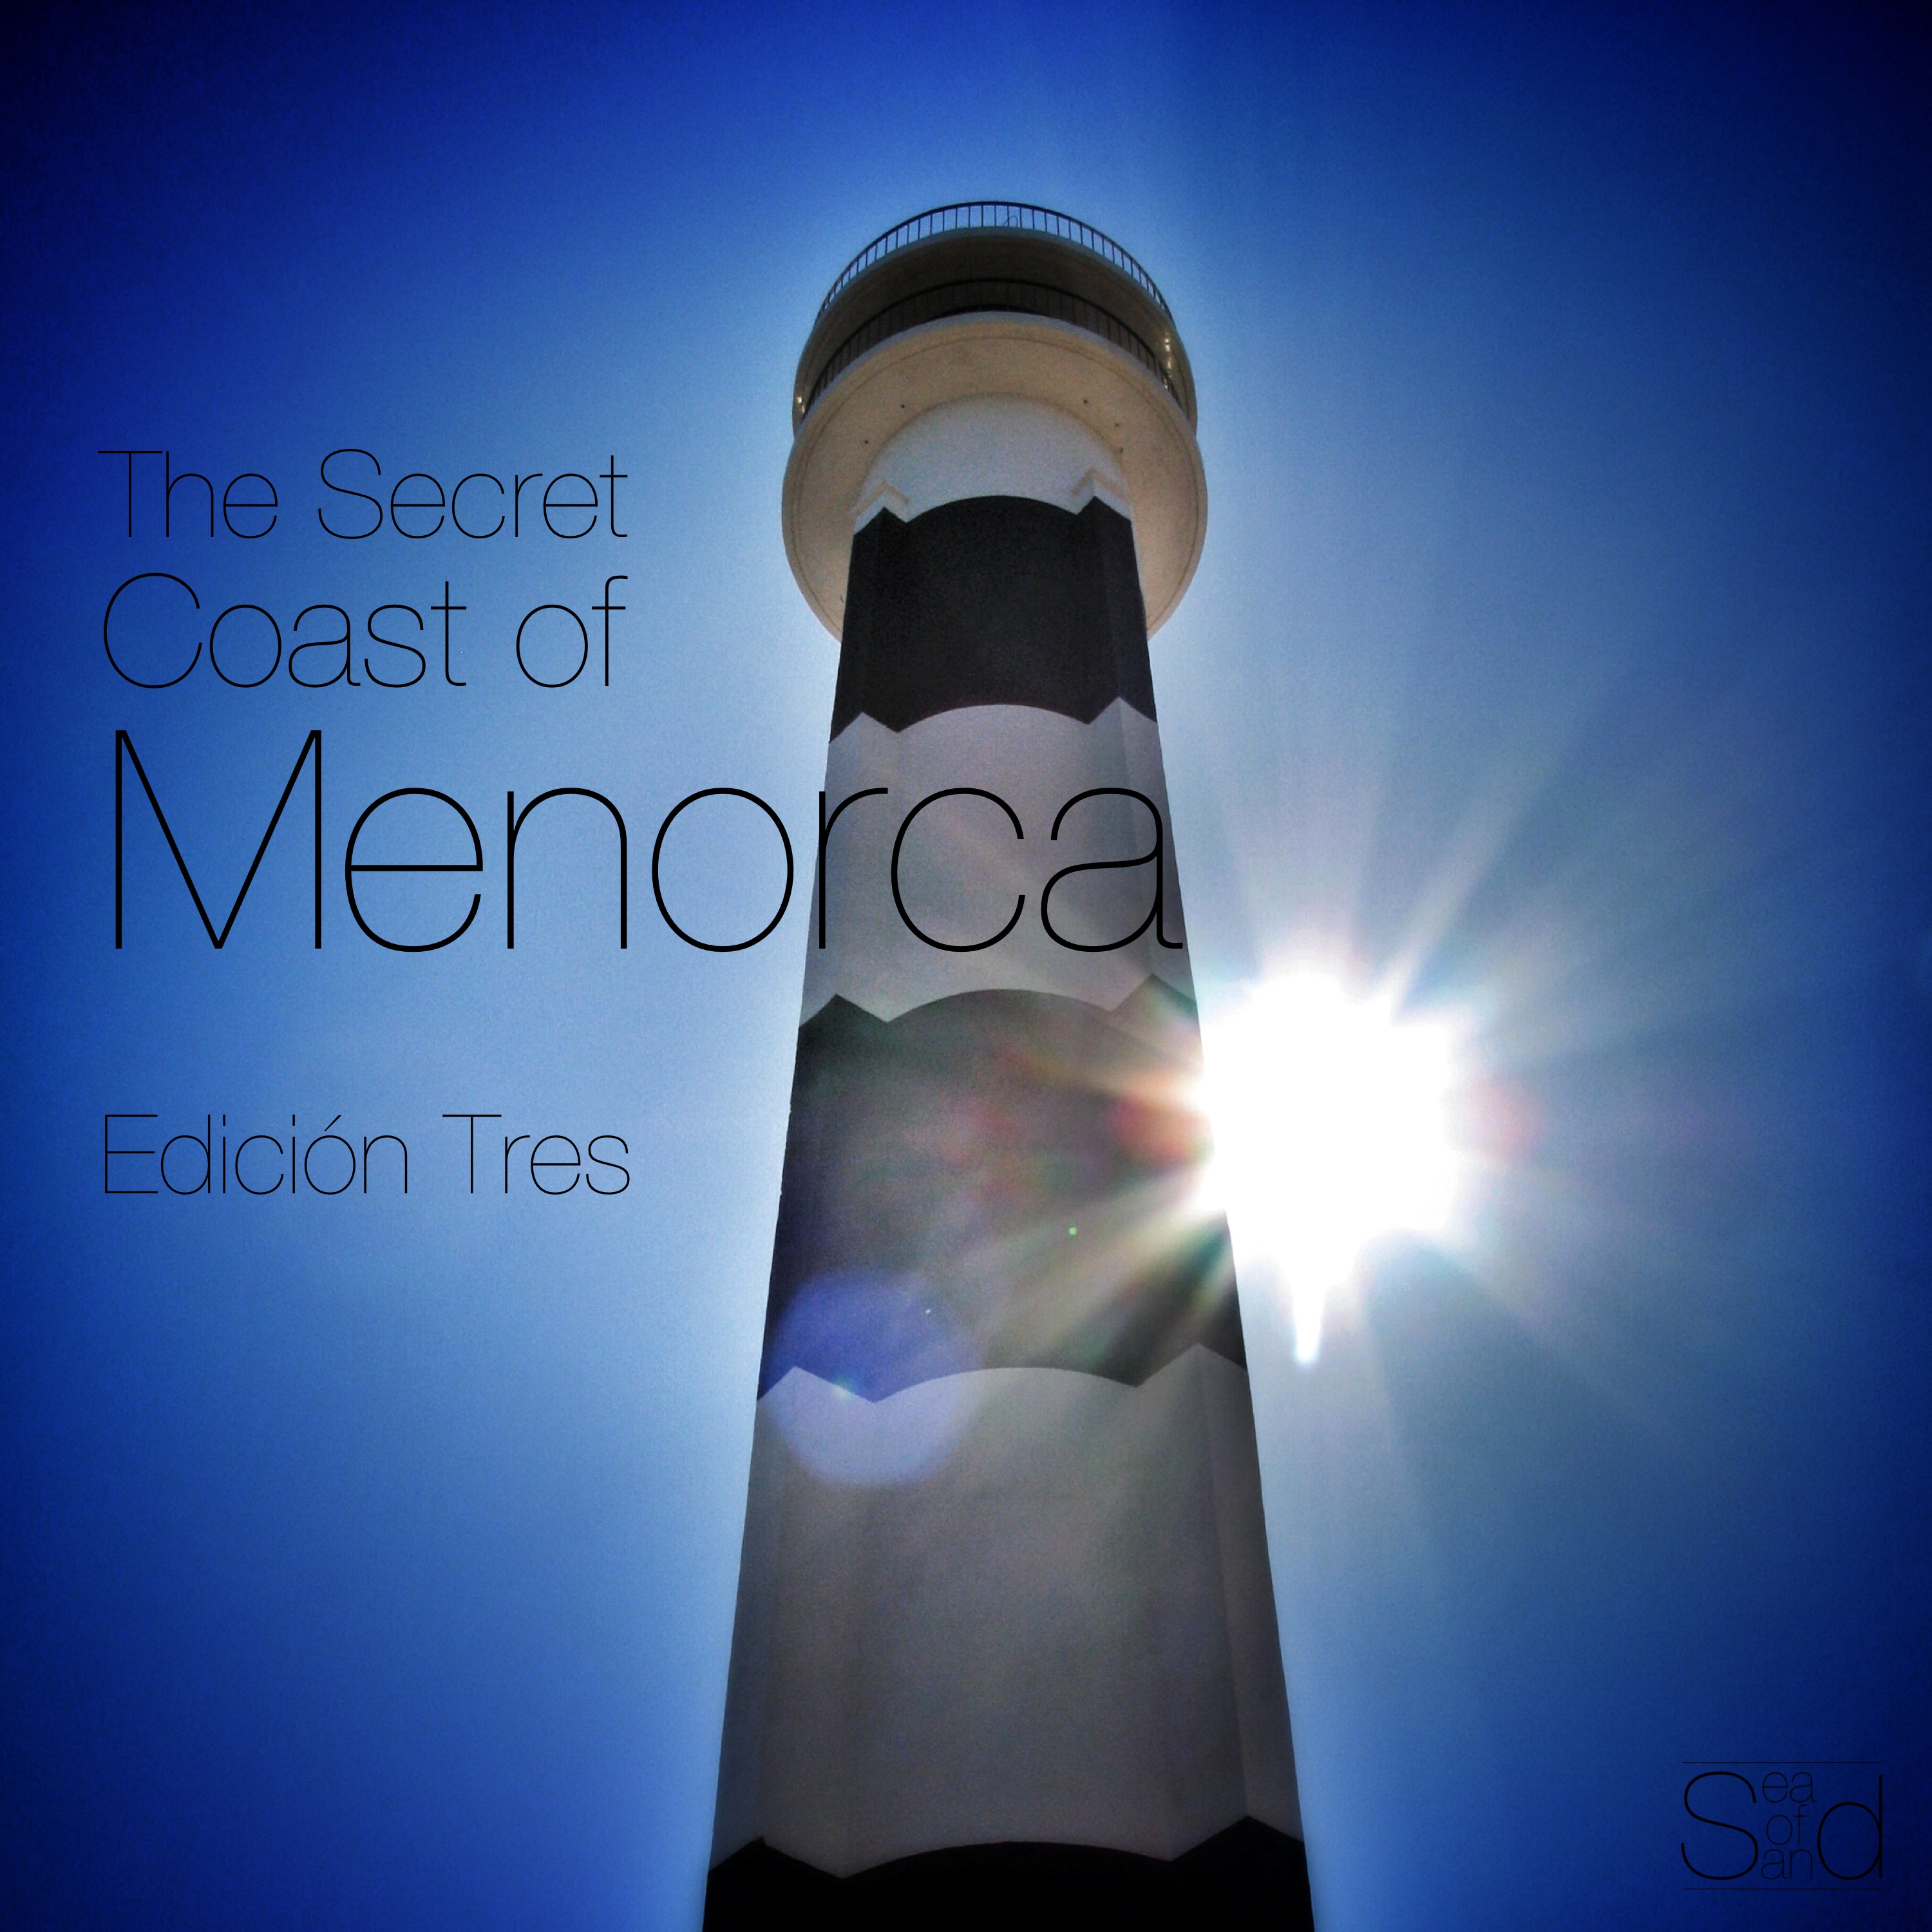 The Secret Coast of Menorca  Edicio n Tres